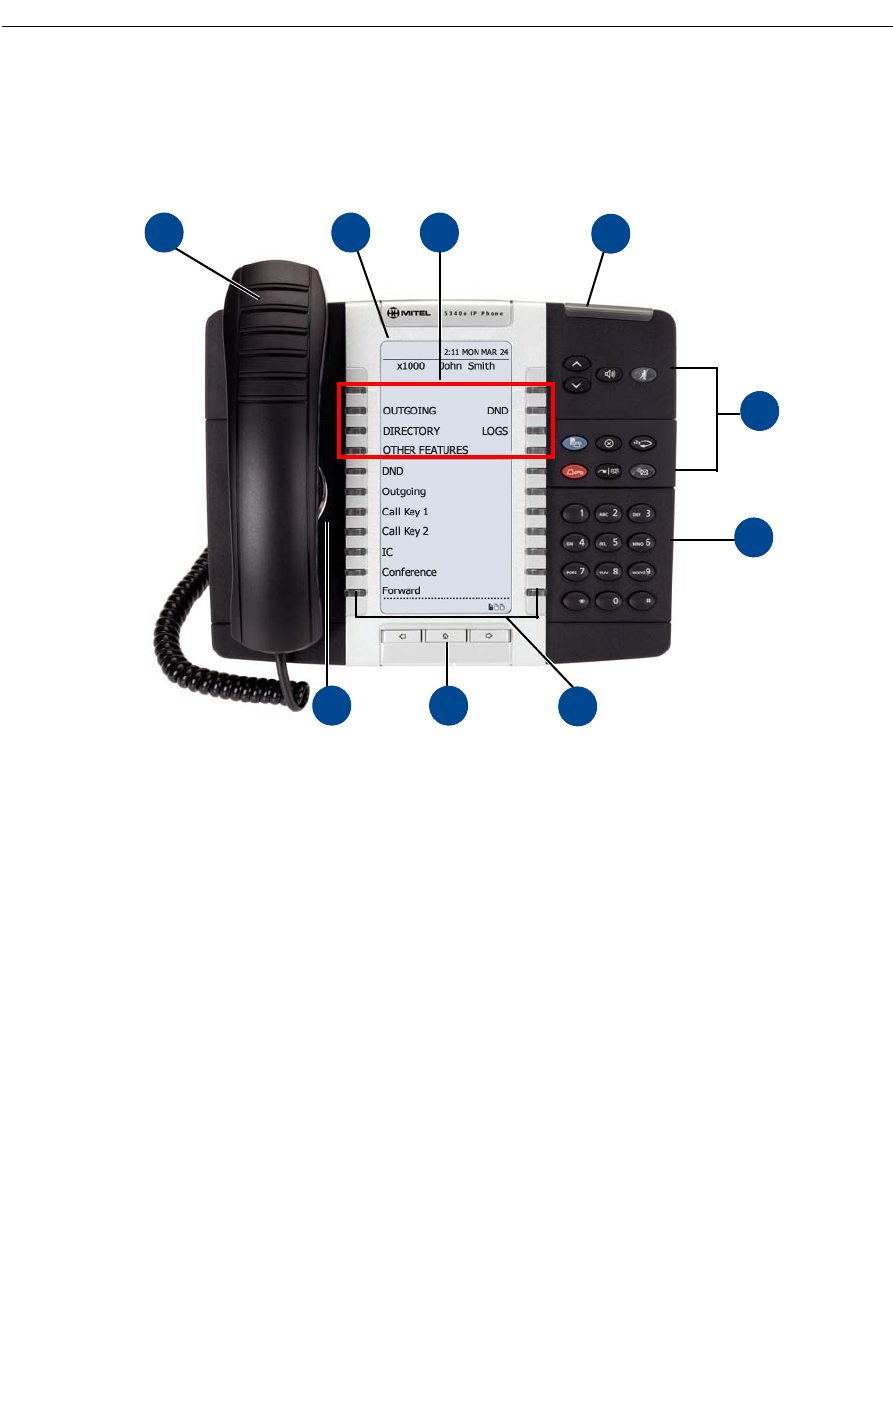 Mitel 5320E Users Manual 5320e/5330e/5340e IP Phones